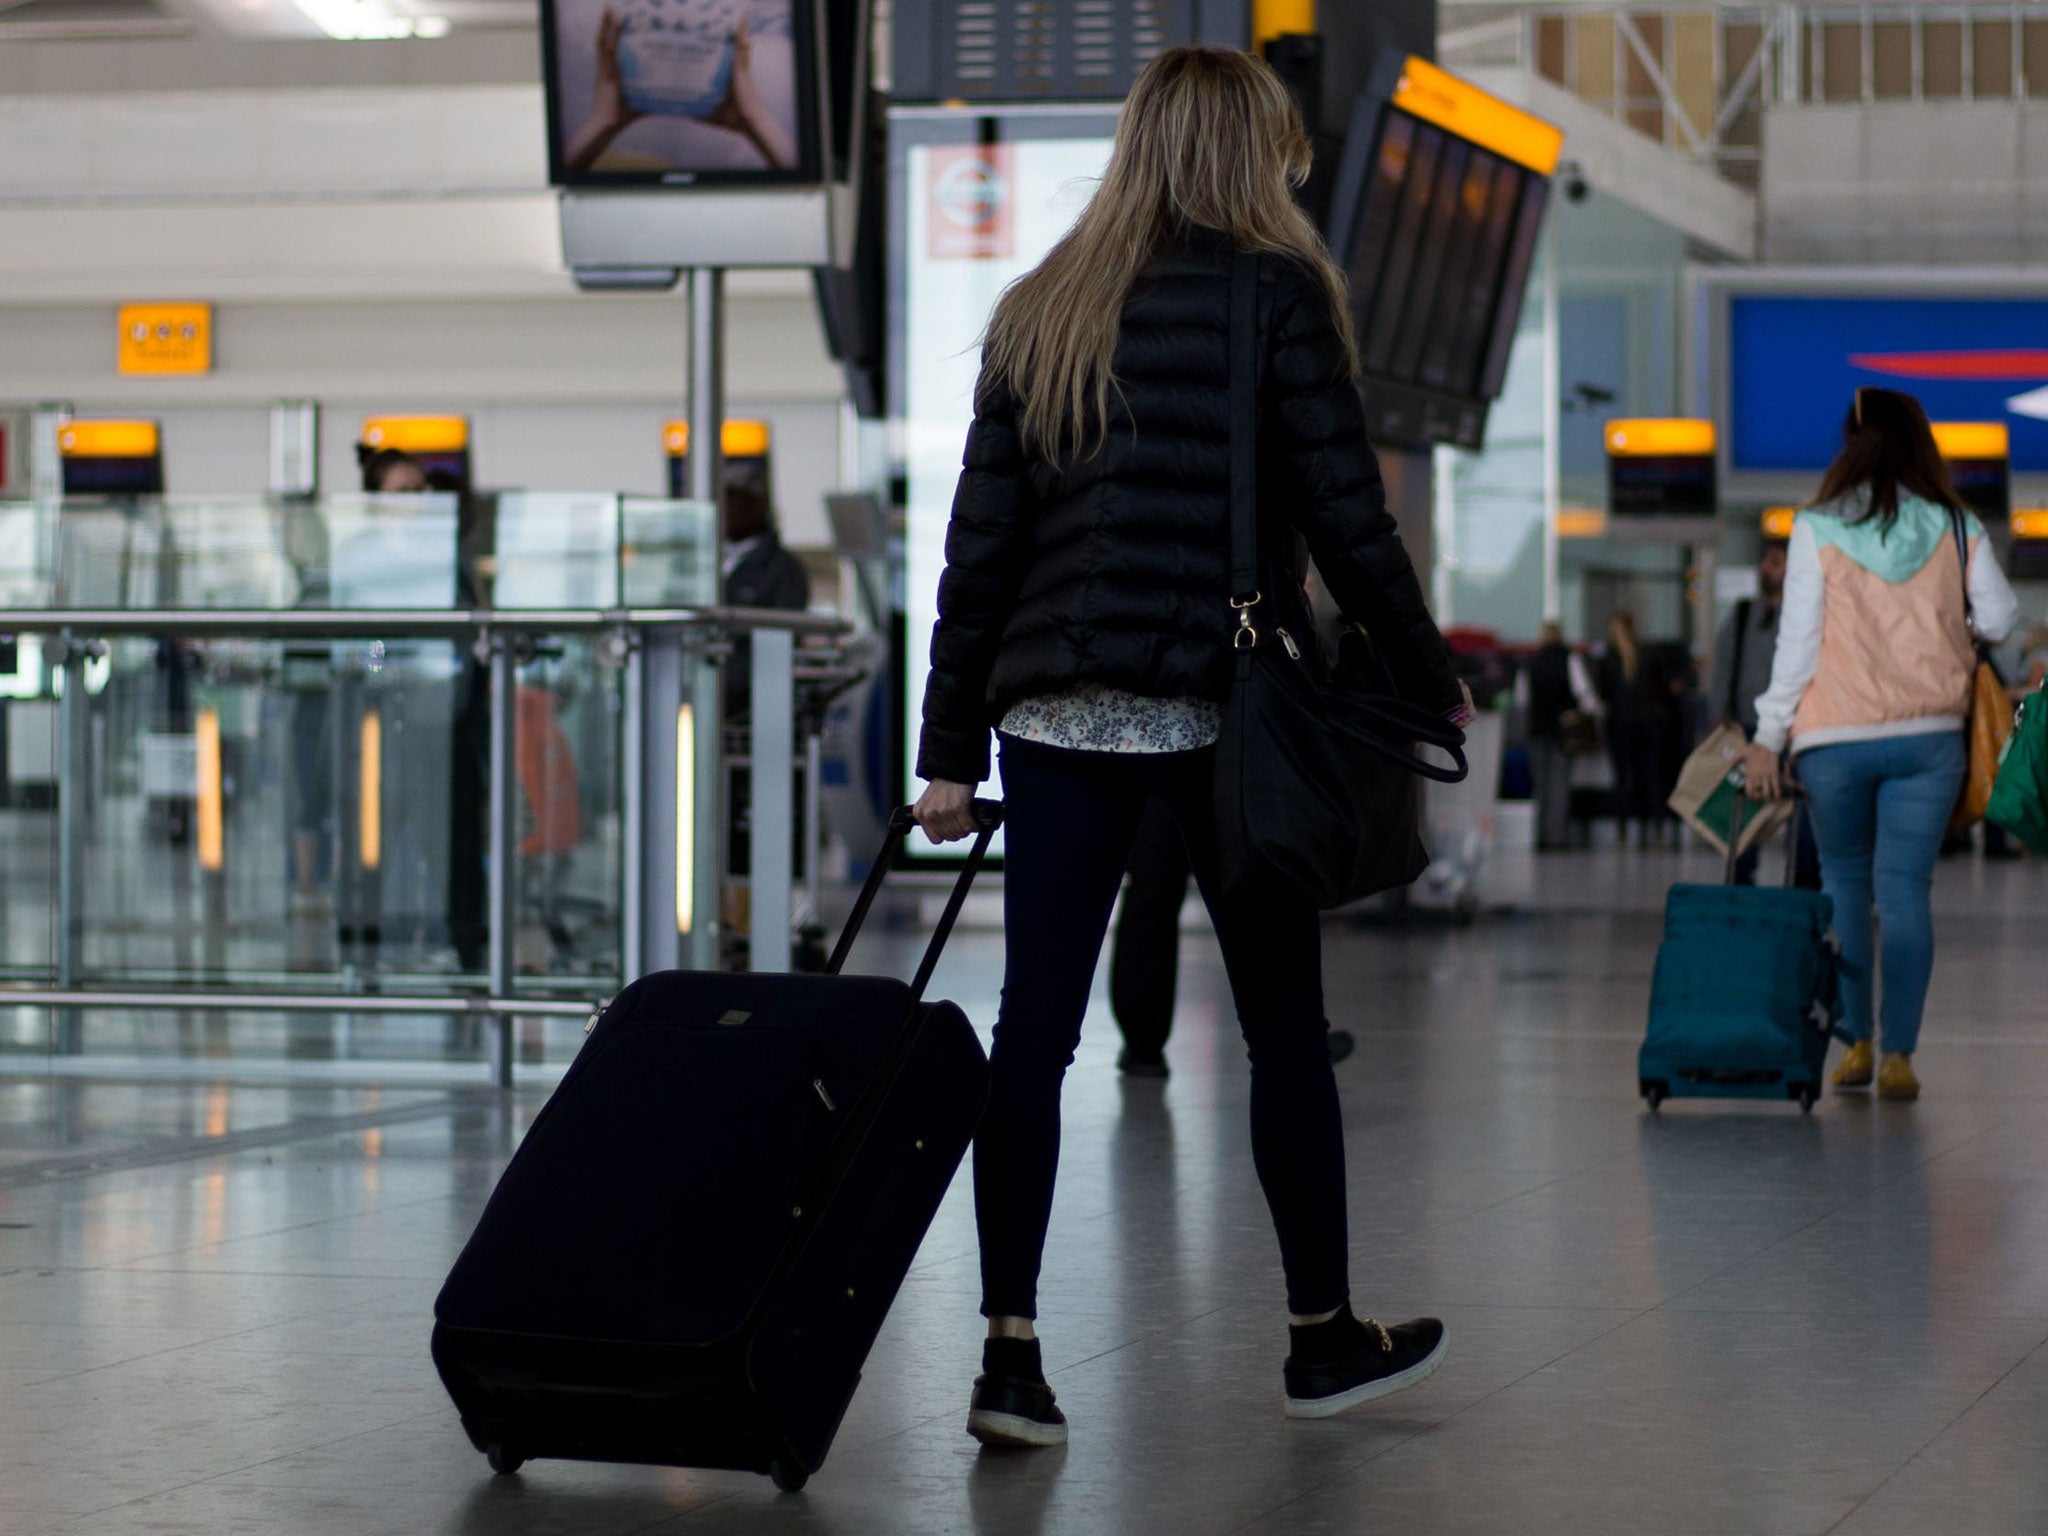 Passengers in the departure area of Heathrow Airport